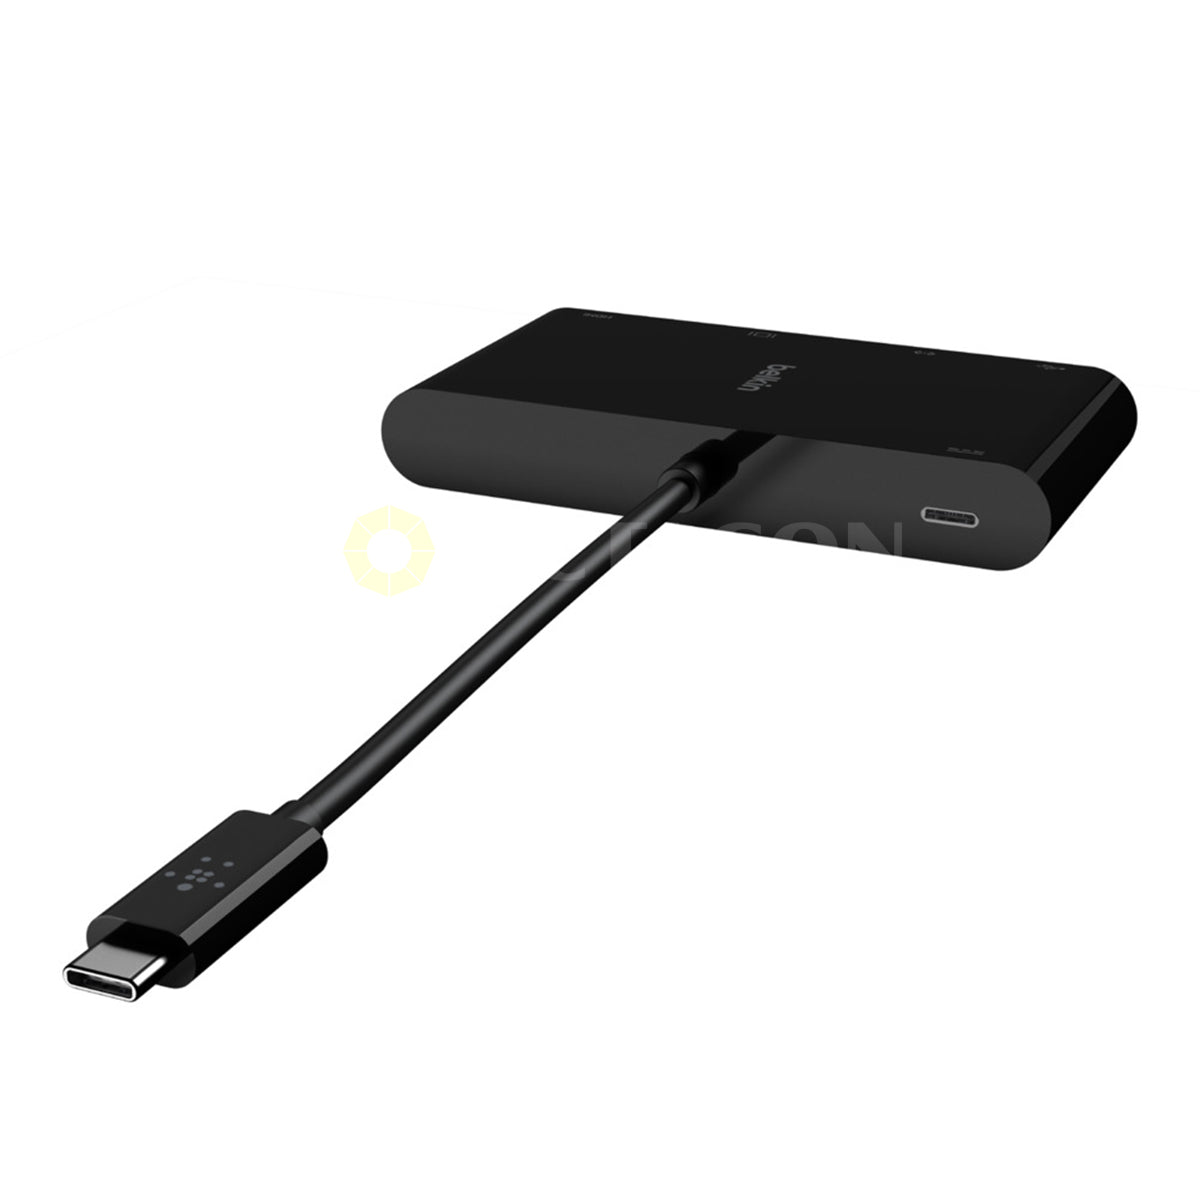  Belkin USB-C to Ethernet + Charge Adapter - Gigabit